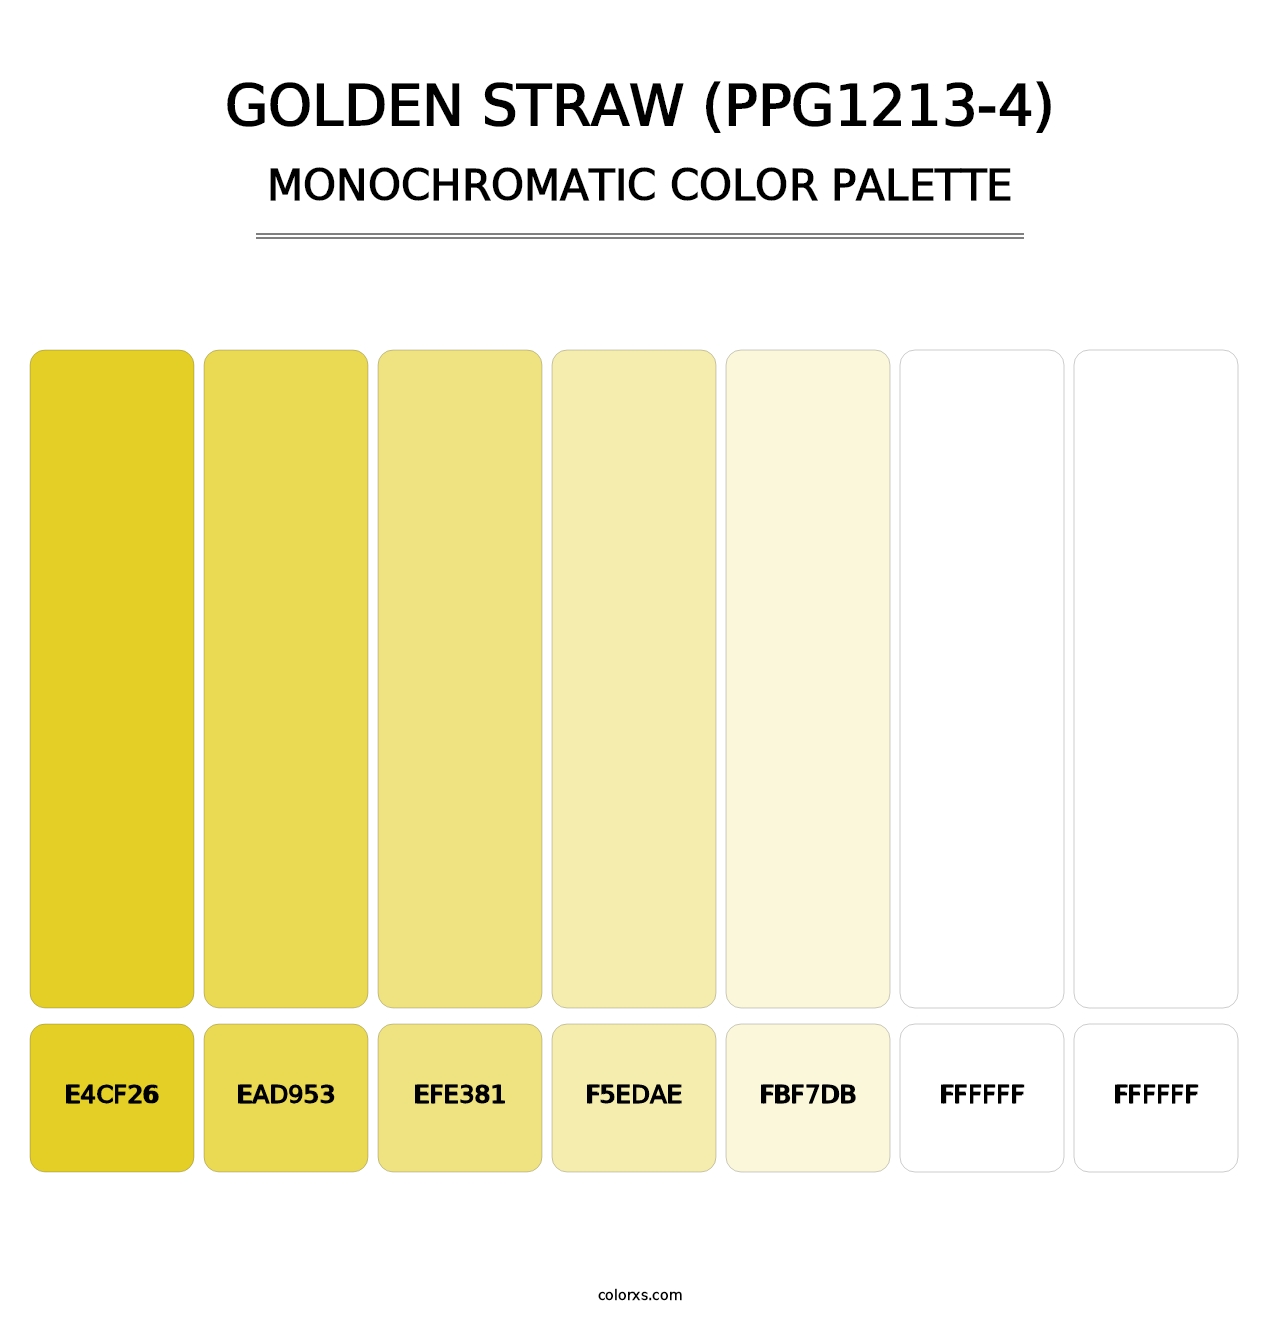 Golden Straw (PPG1213-4) - Monochromatic Color Palette